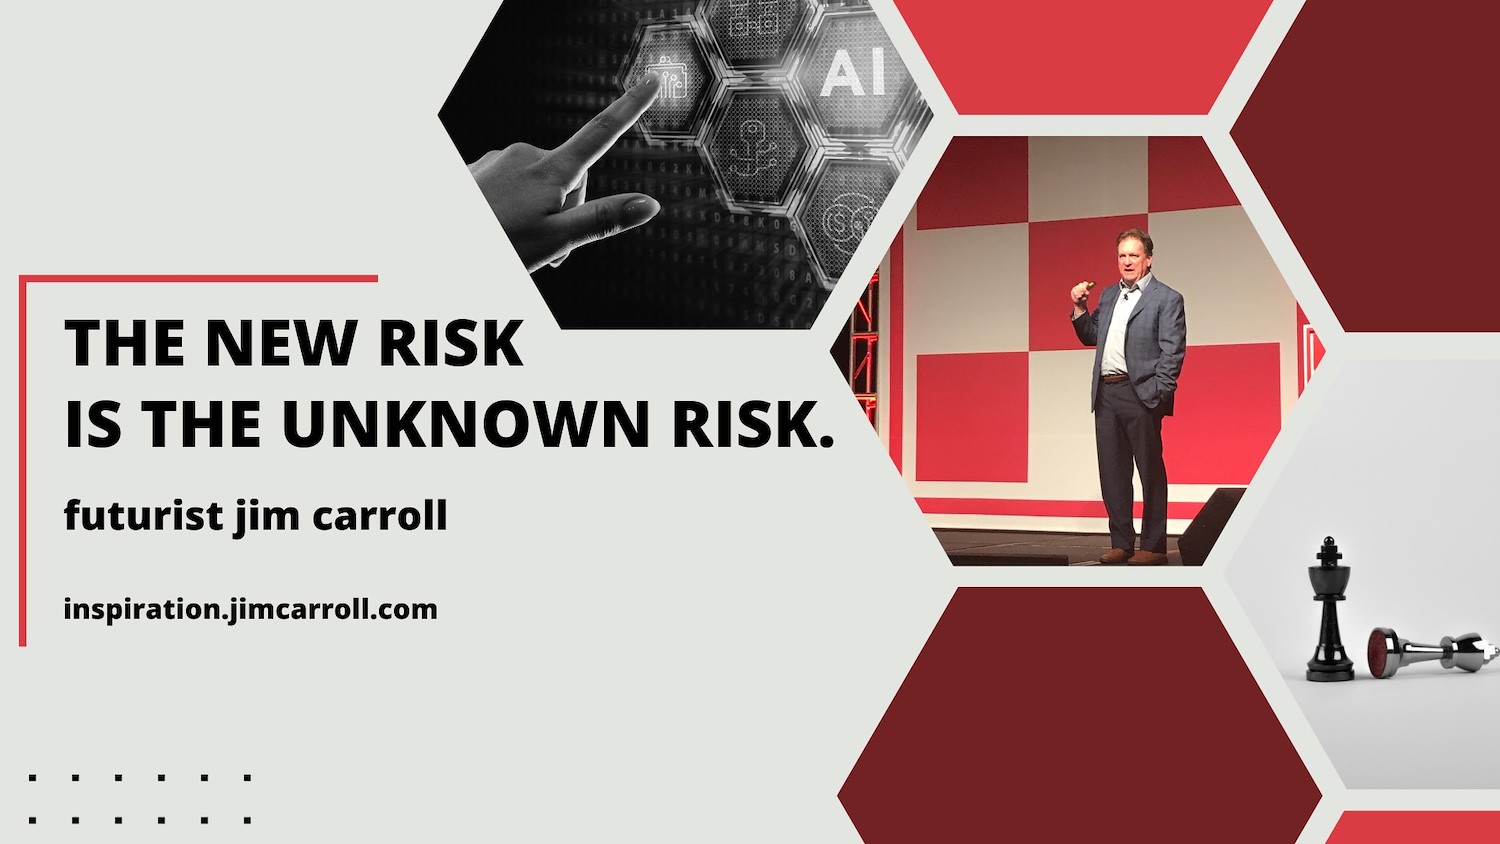 "The new risk is the unknown risk!" - Futurist Jim Carroll